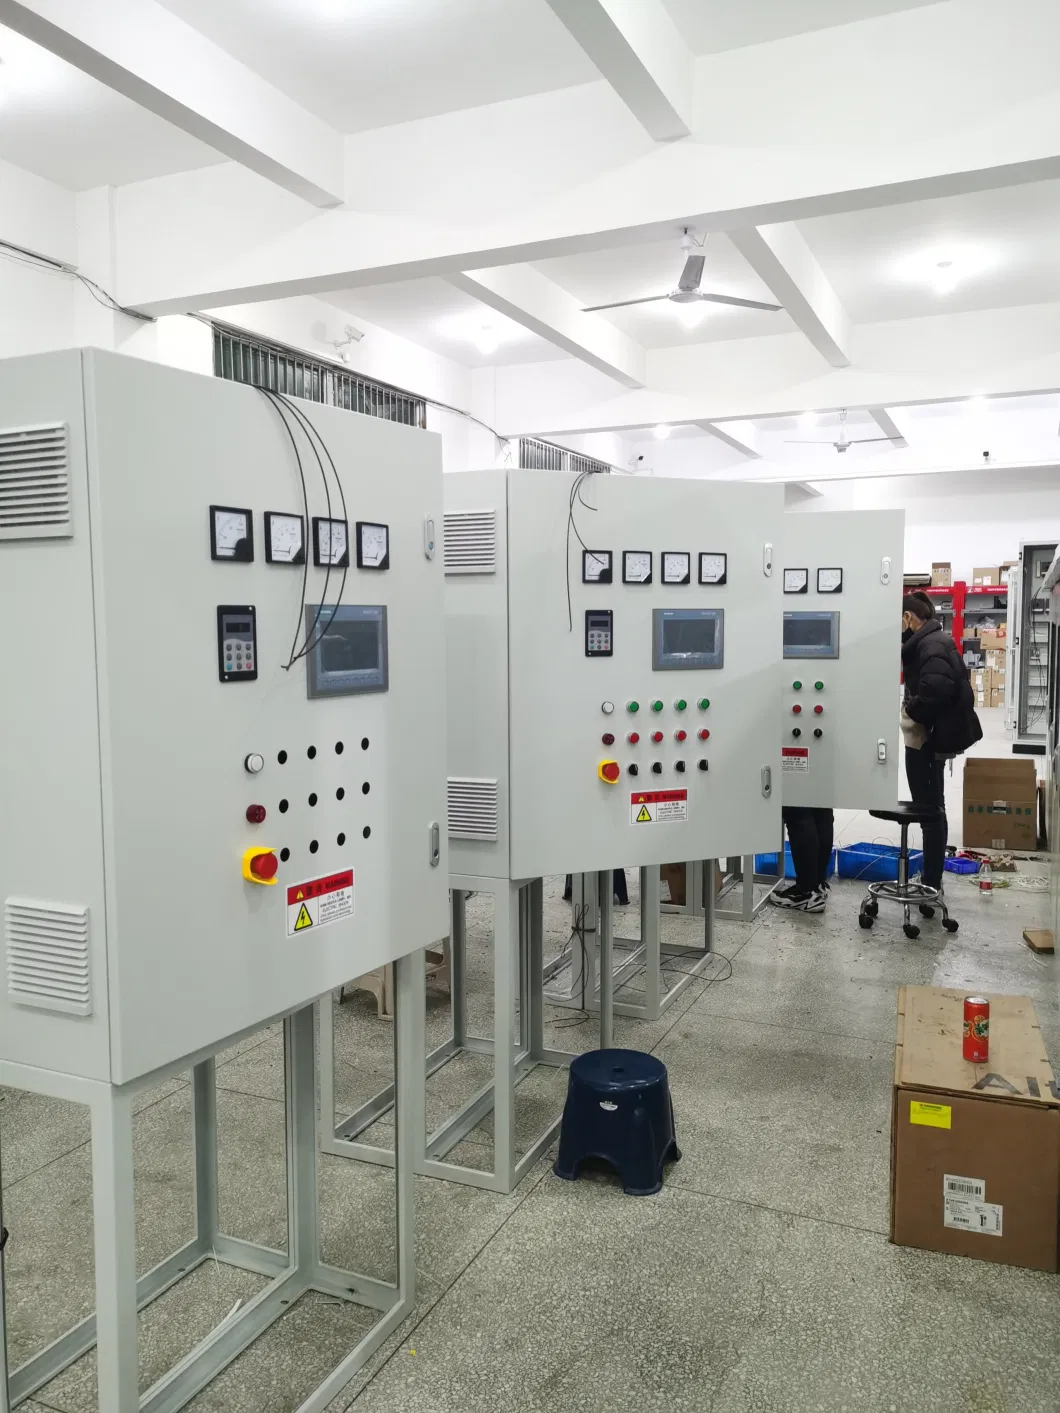 Q13 PLC Control Cabinet Complete Automation System Electric Control Panel